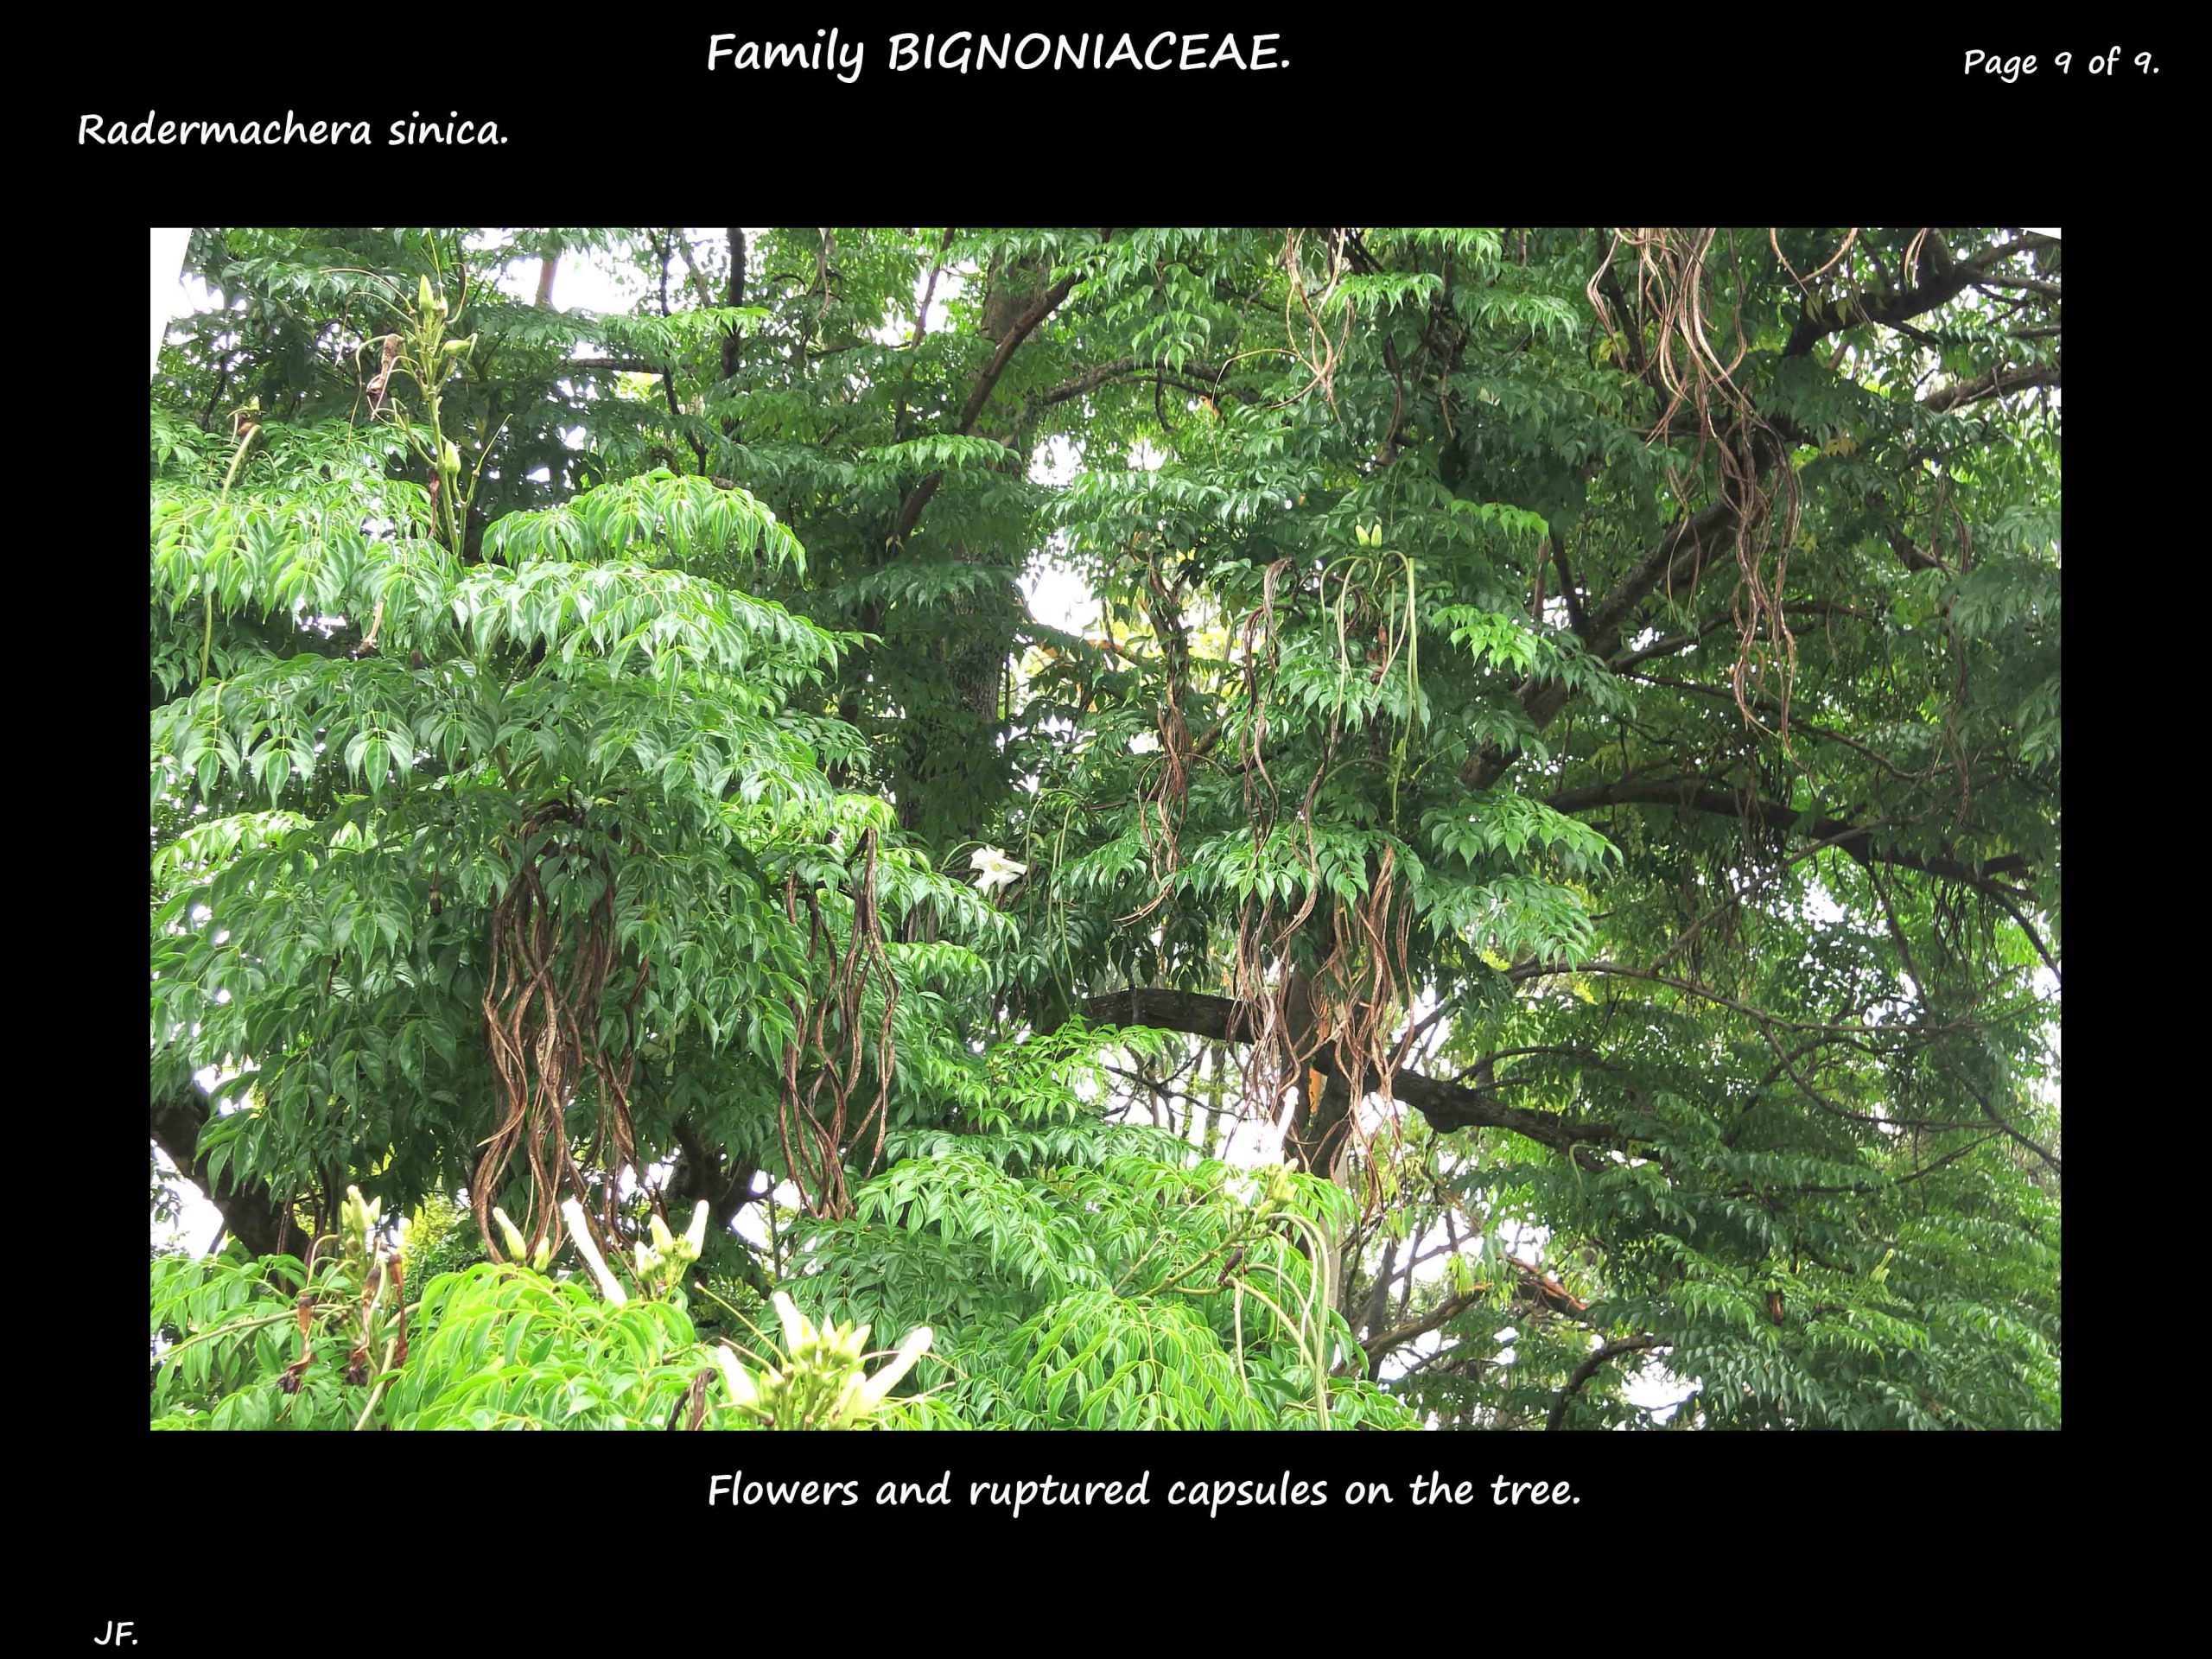 9 Radermachera sinica capsules on tree